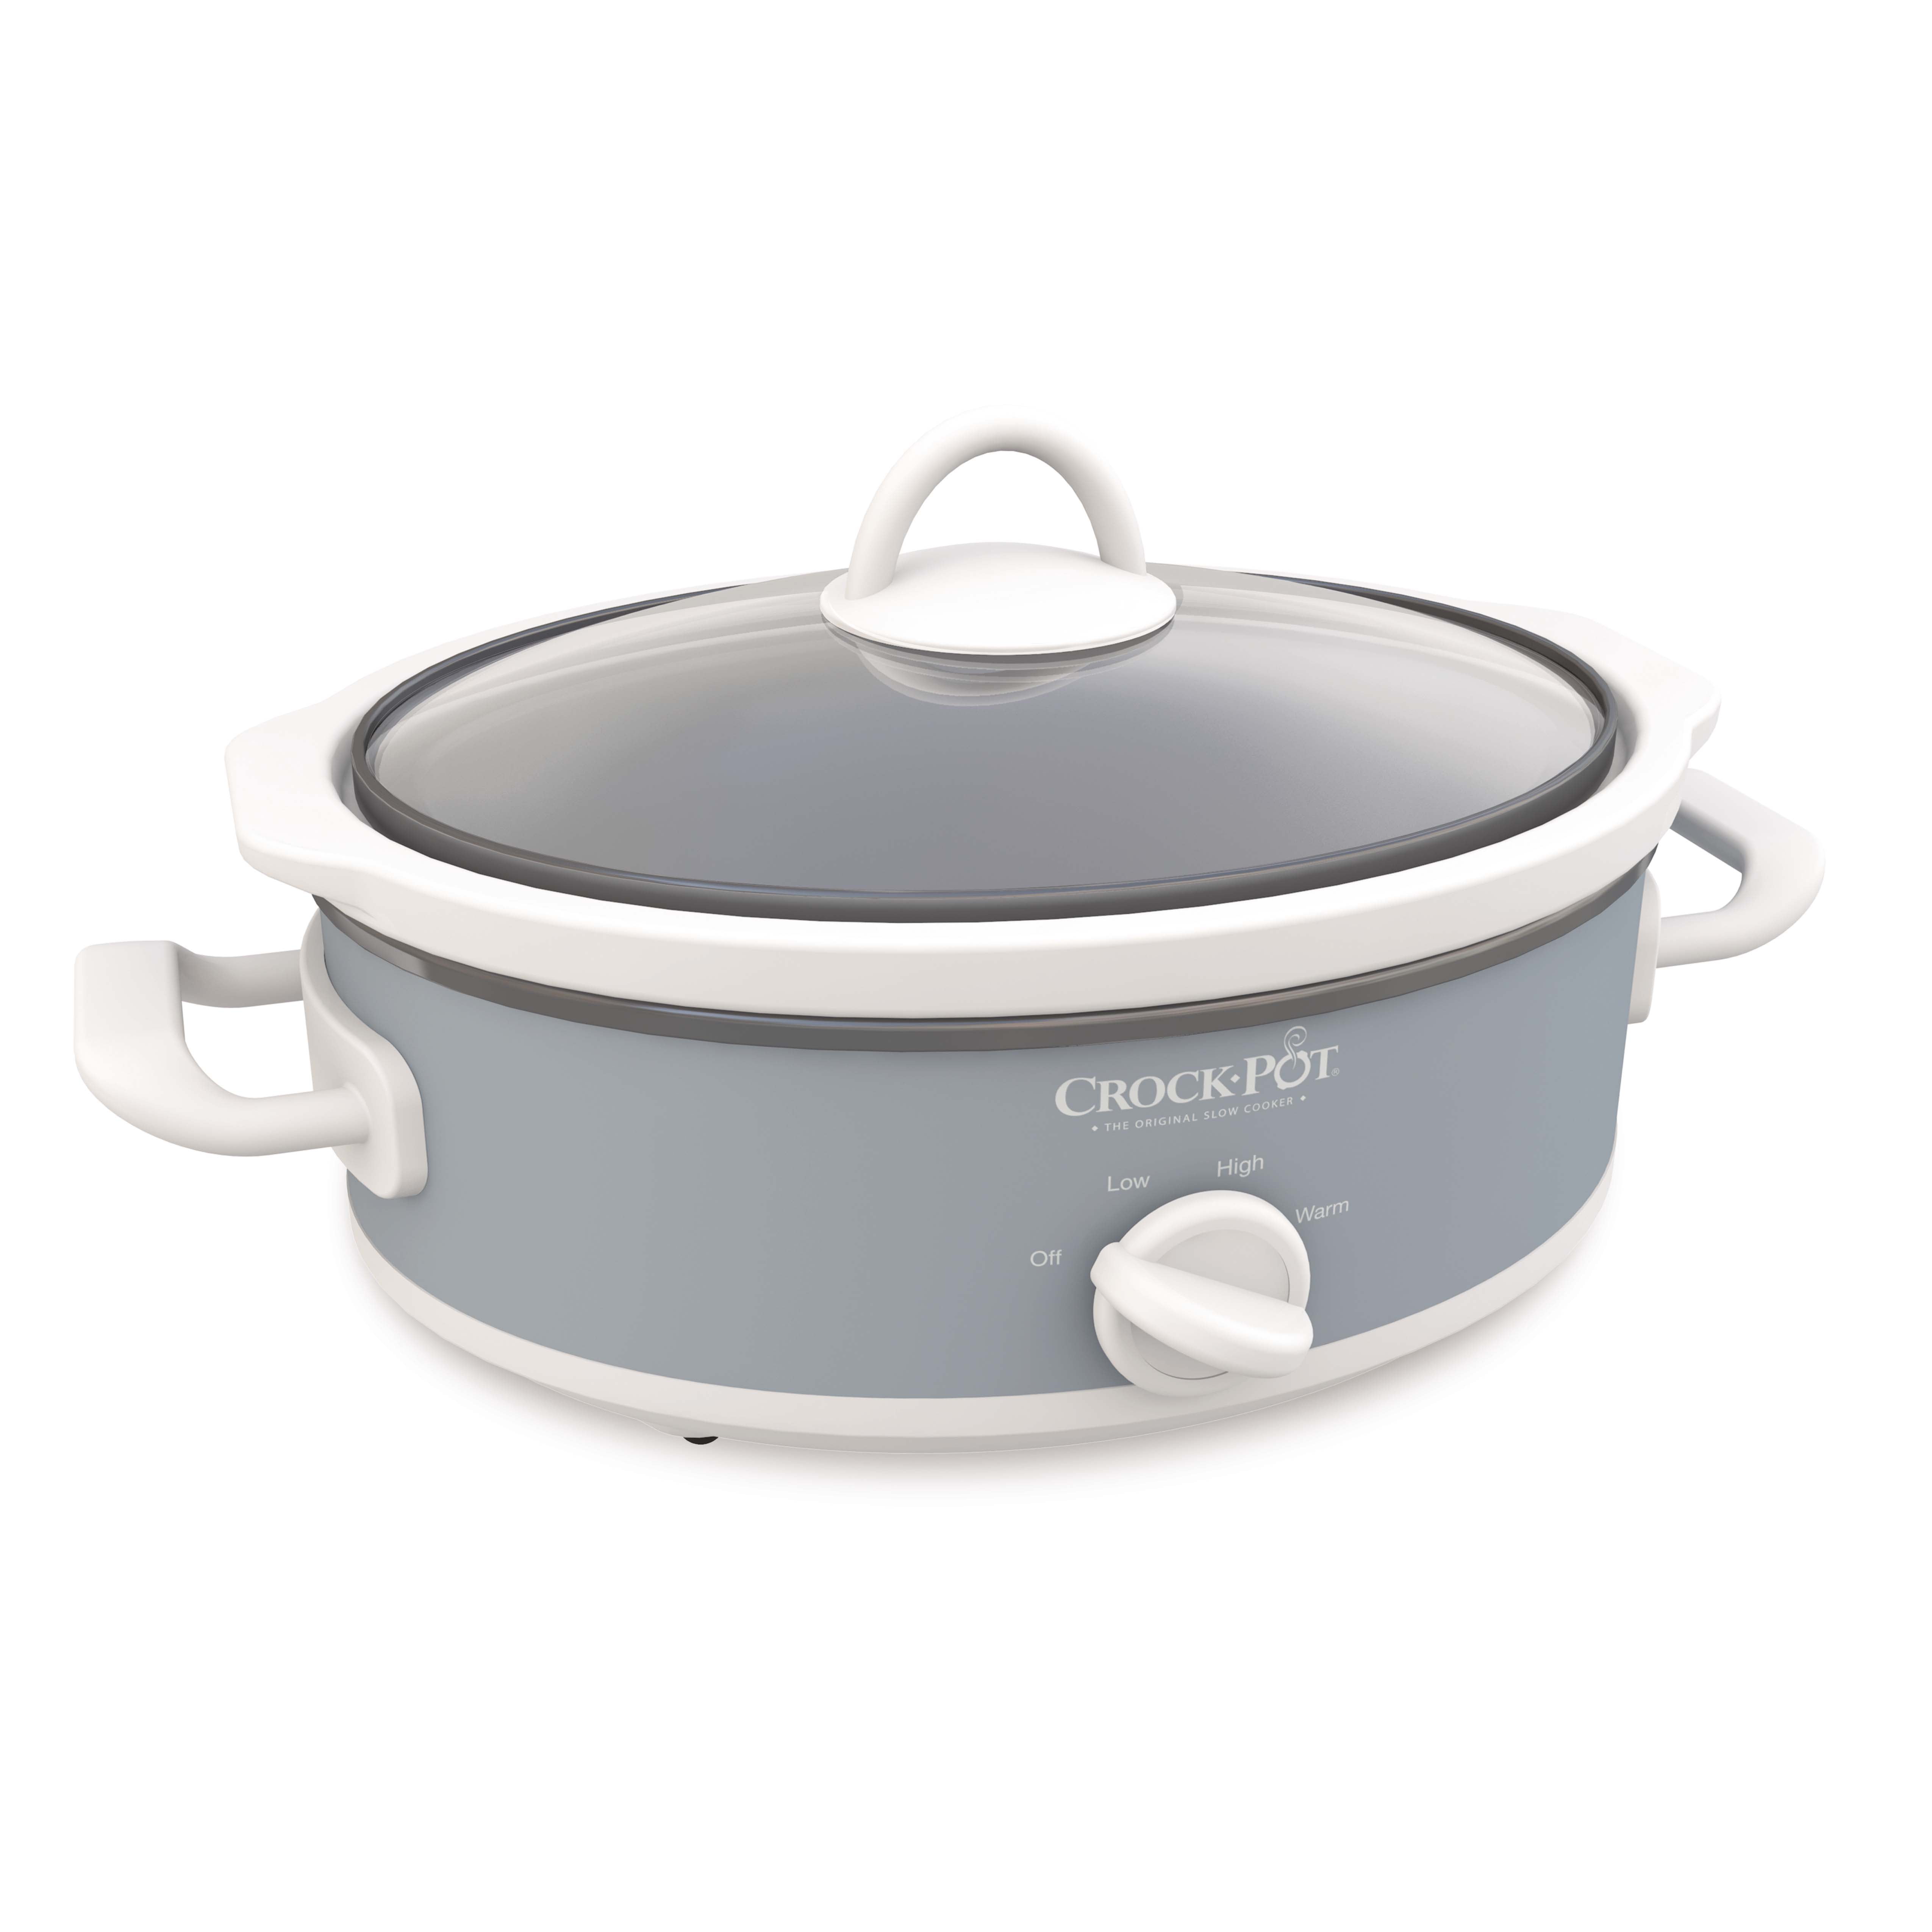 crock-pot-2-5-quart-miniature-casserole-oval-shaped-slow-cooker-crock-pot-gray-walmart